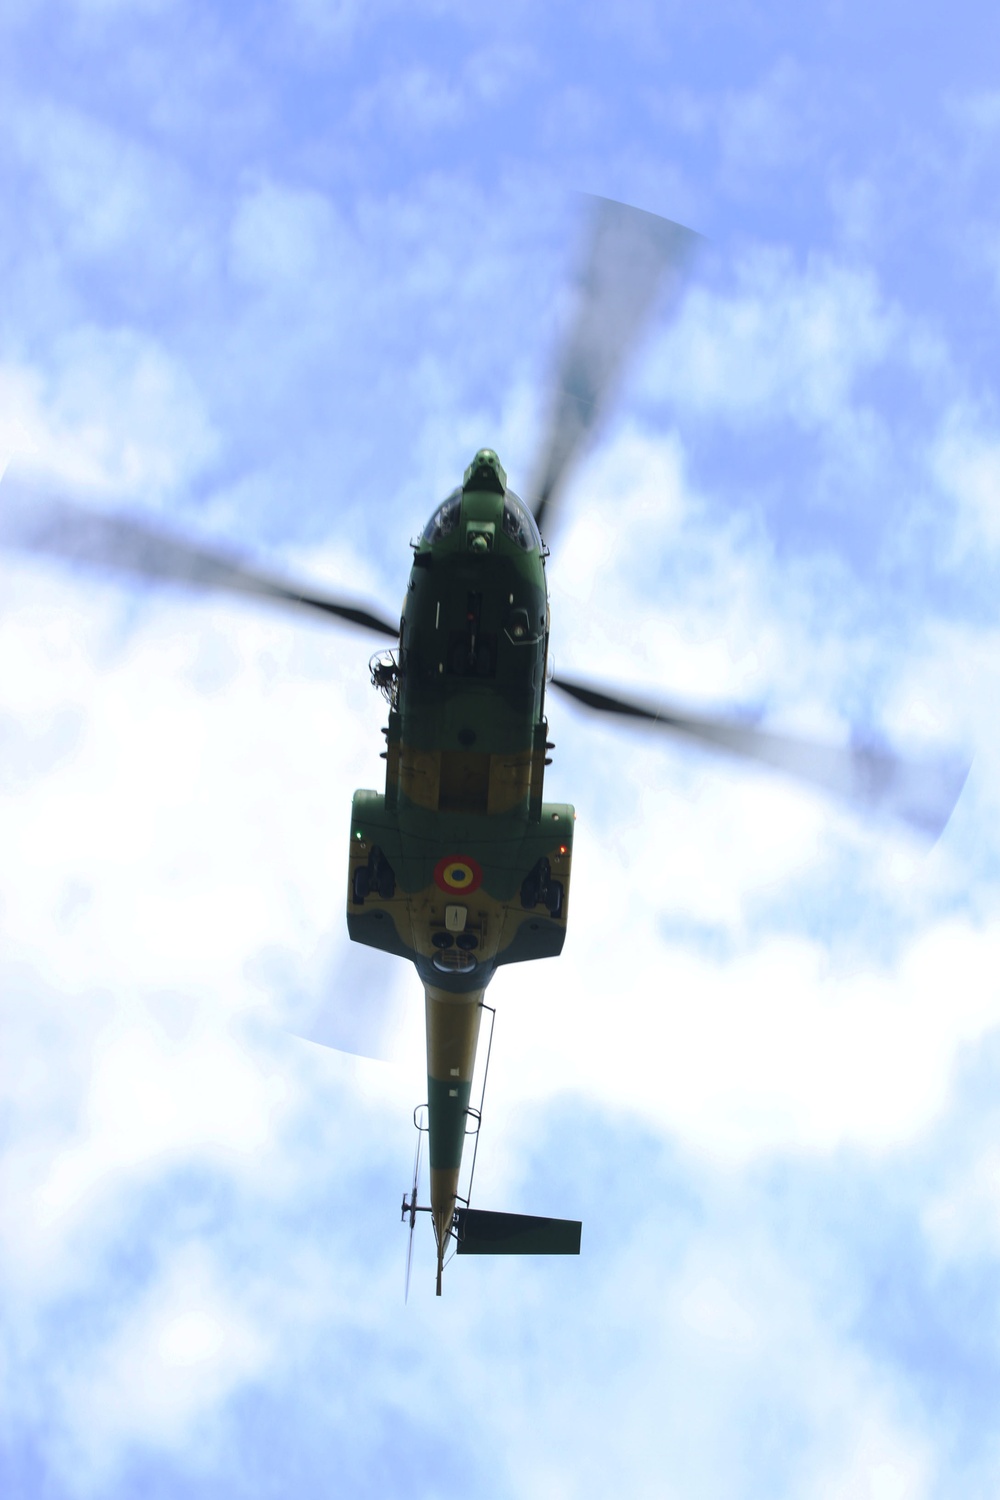 Romanian IAR 330 Puma provides overwatch during Saber Guardian 19